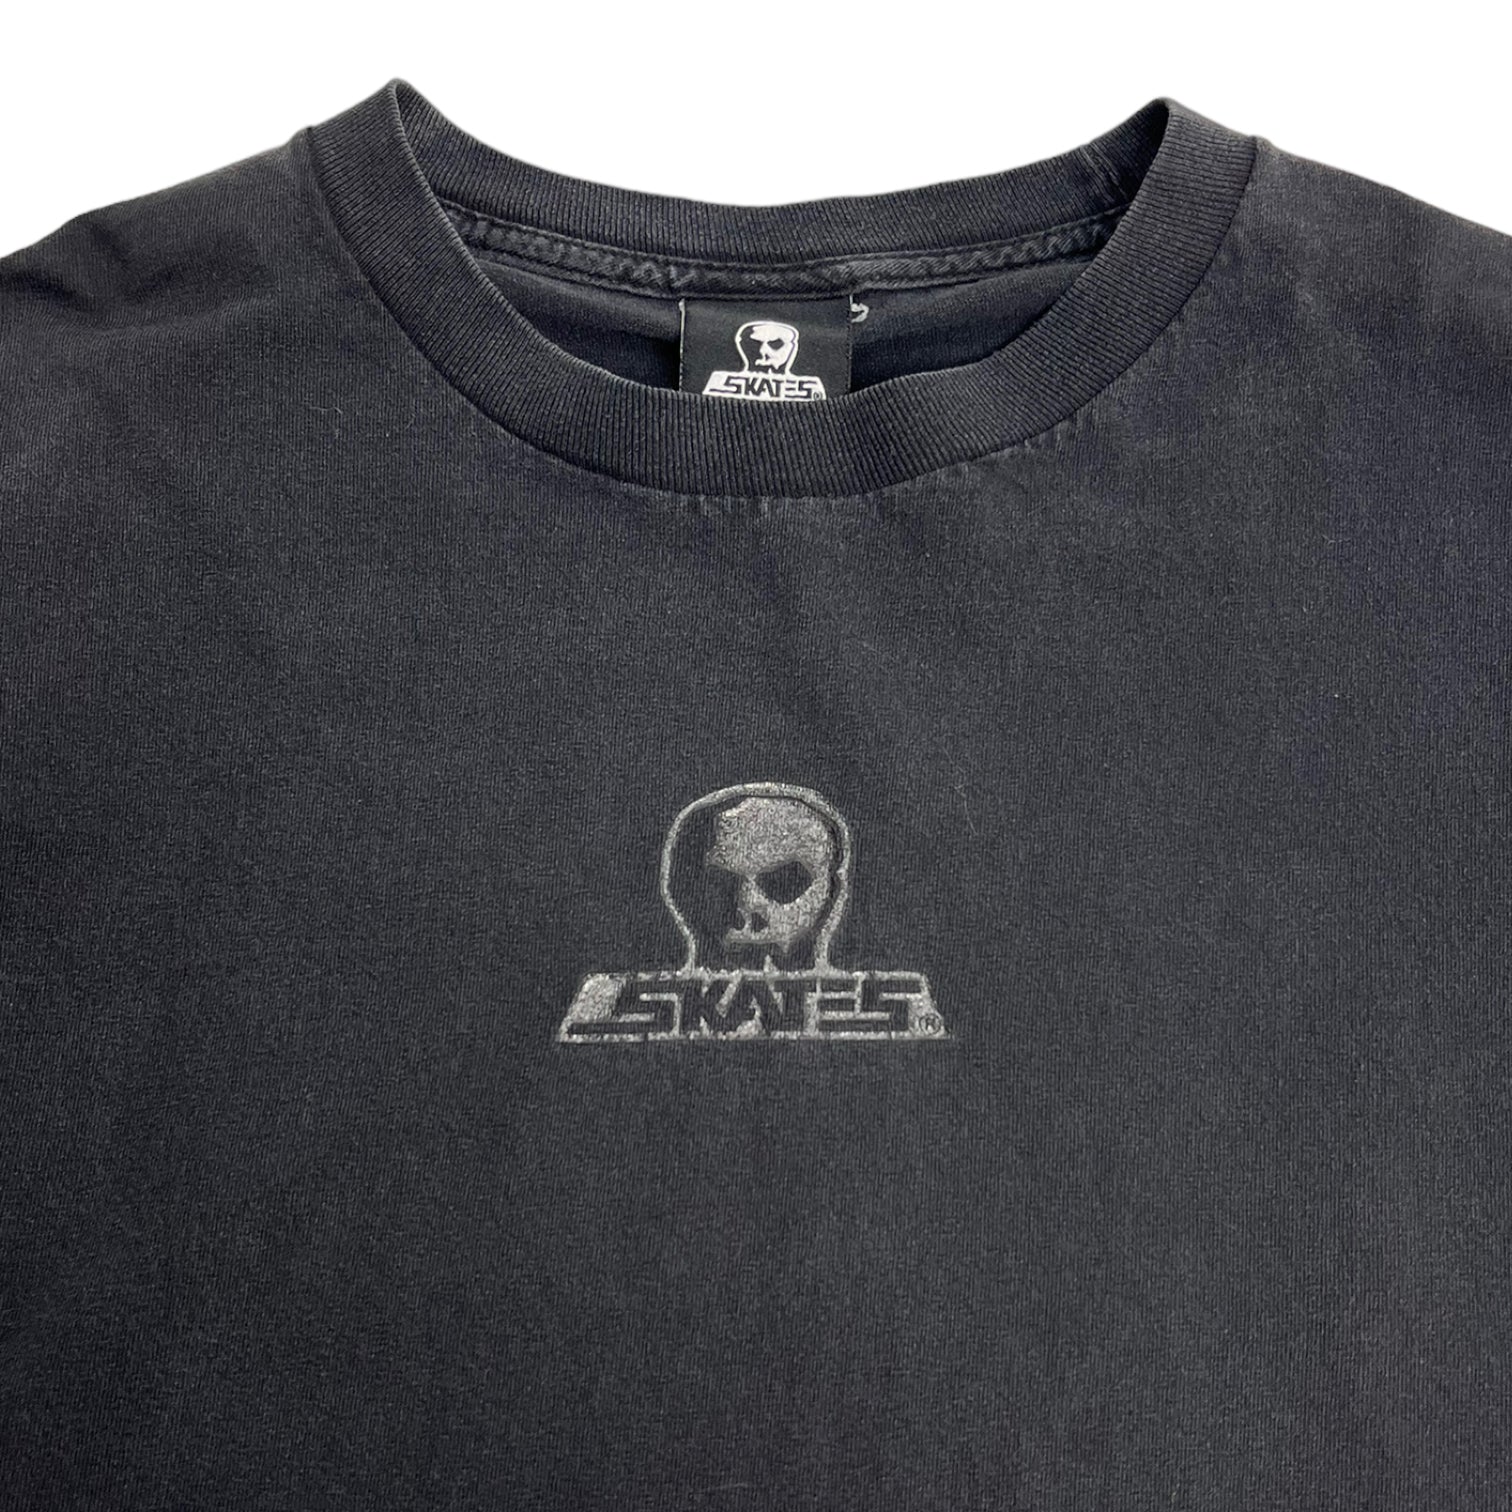 Vintage Skates Skull Long Sleeve T-Shirt